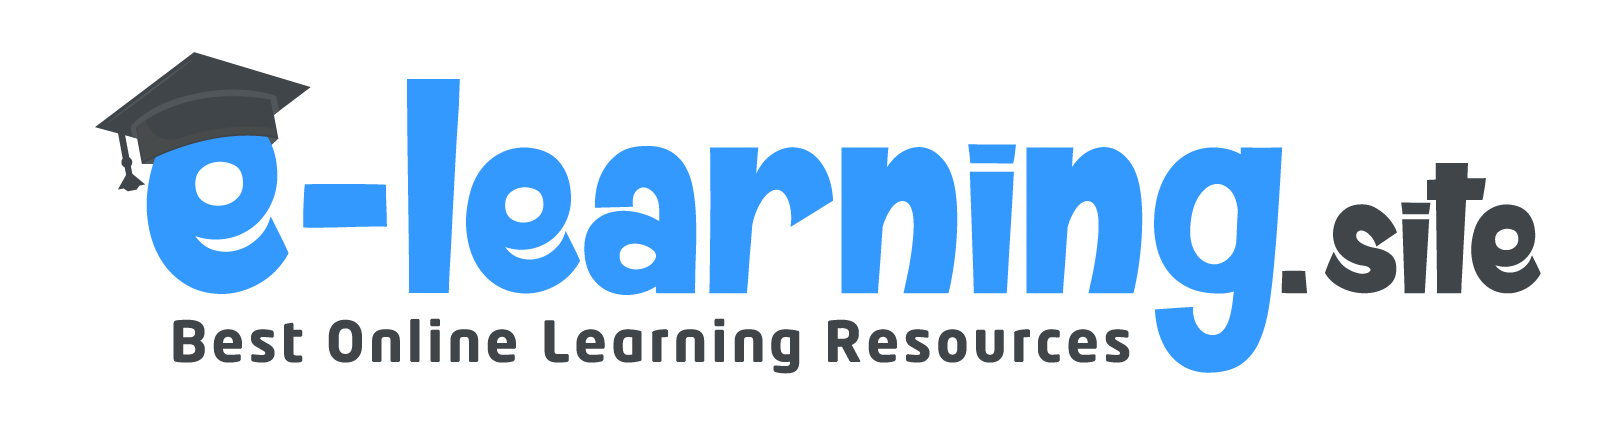 e-learning-logo